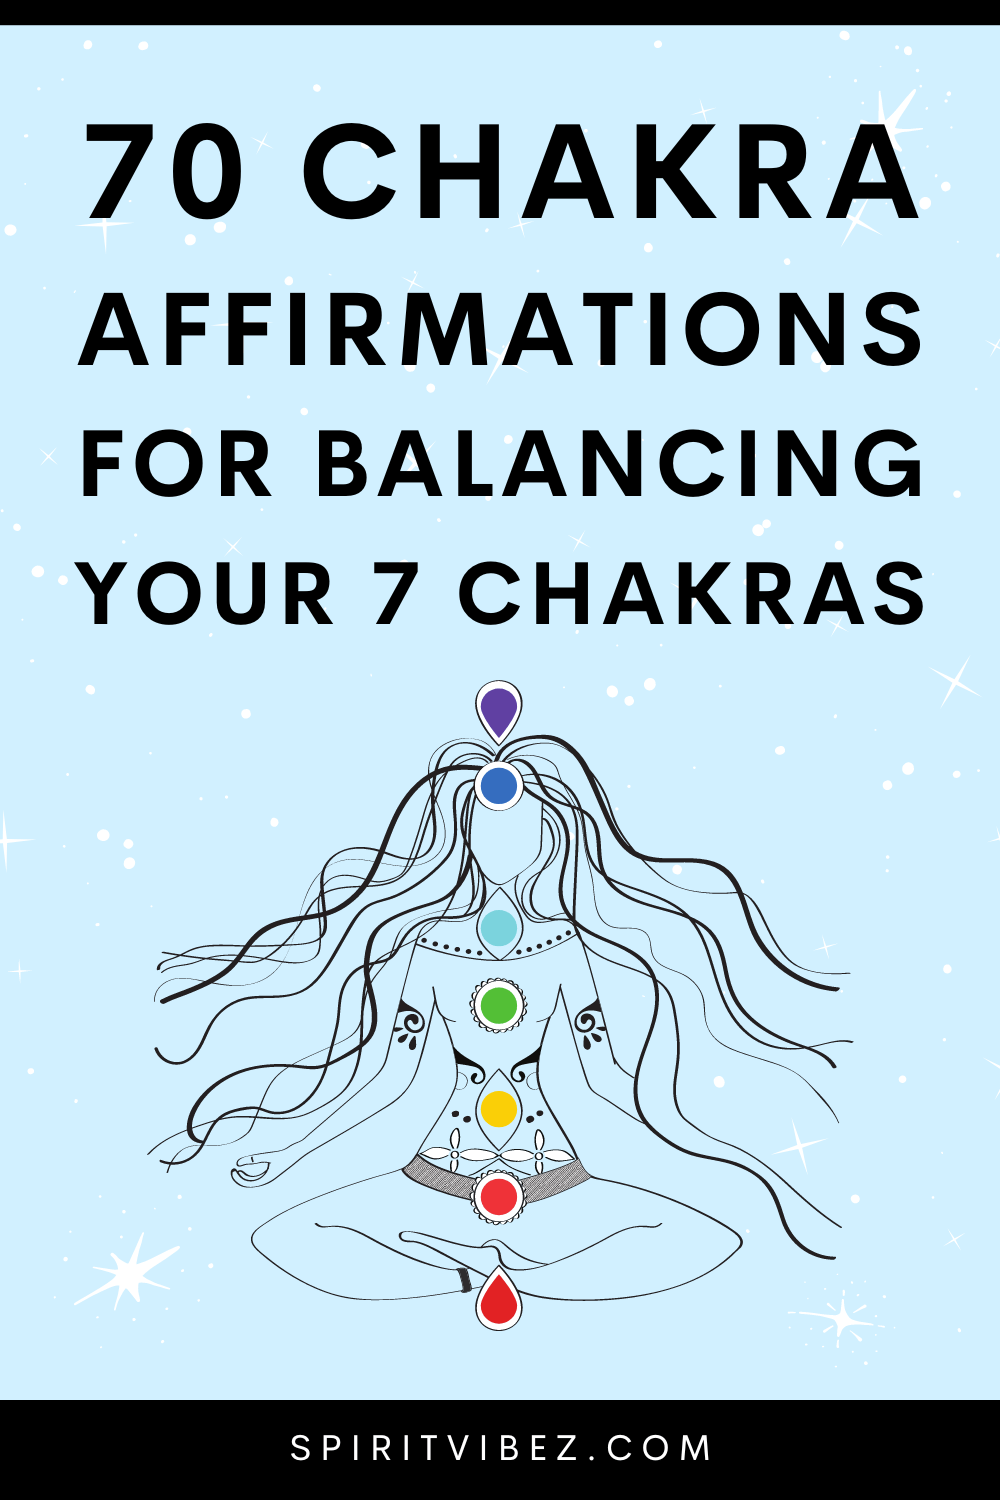 70 Chakra Affirmations to Balance Your 7 Chakras - Spiritvibez